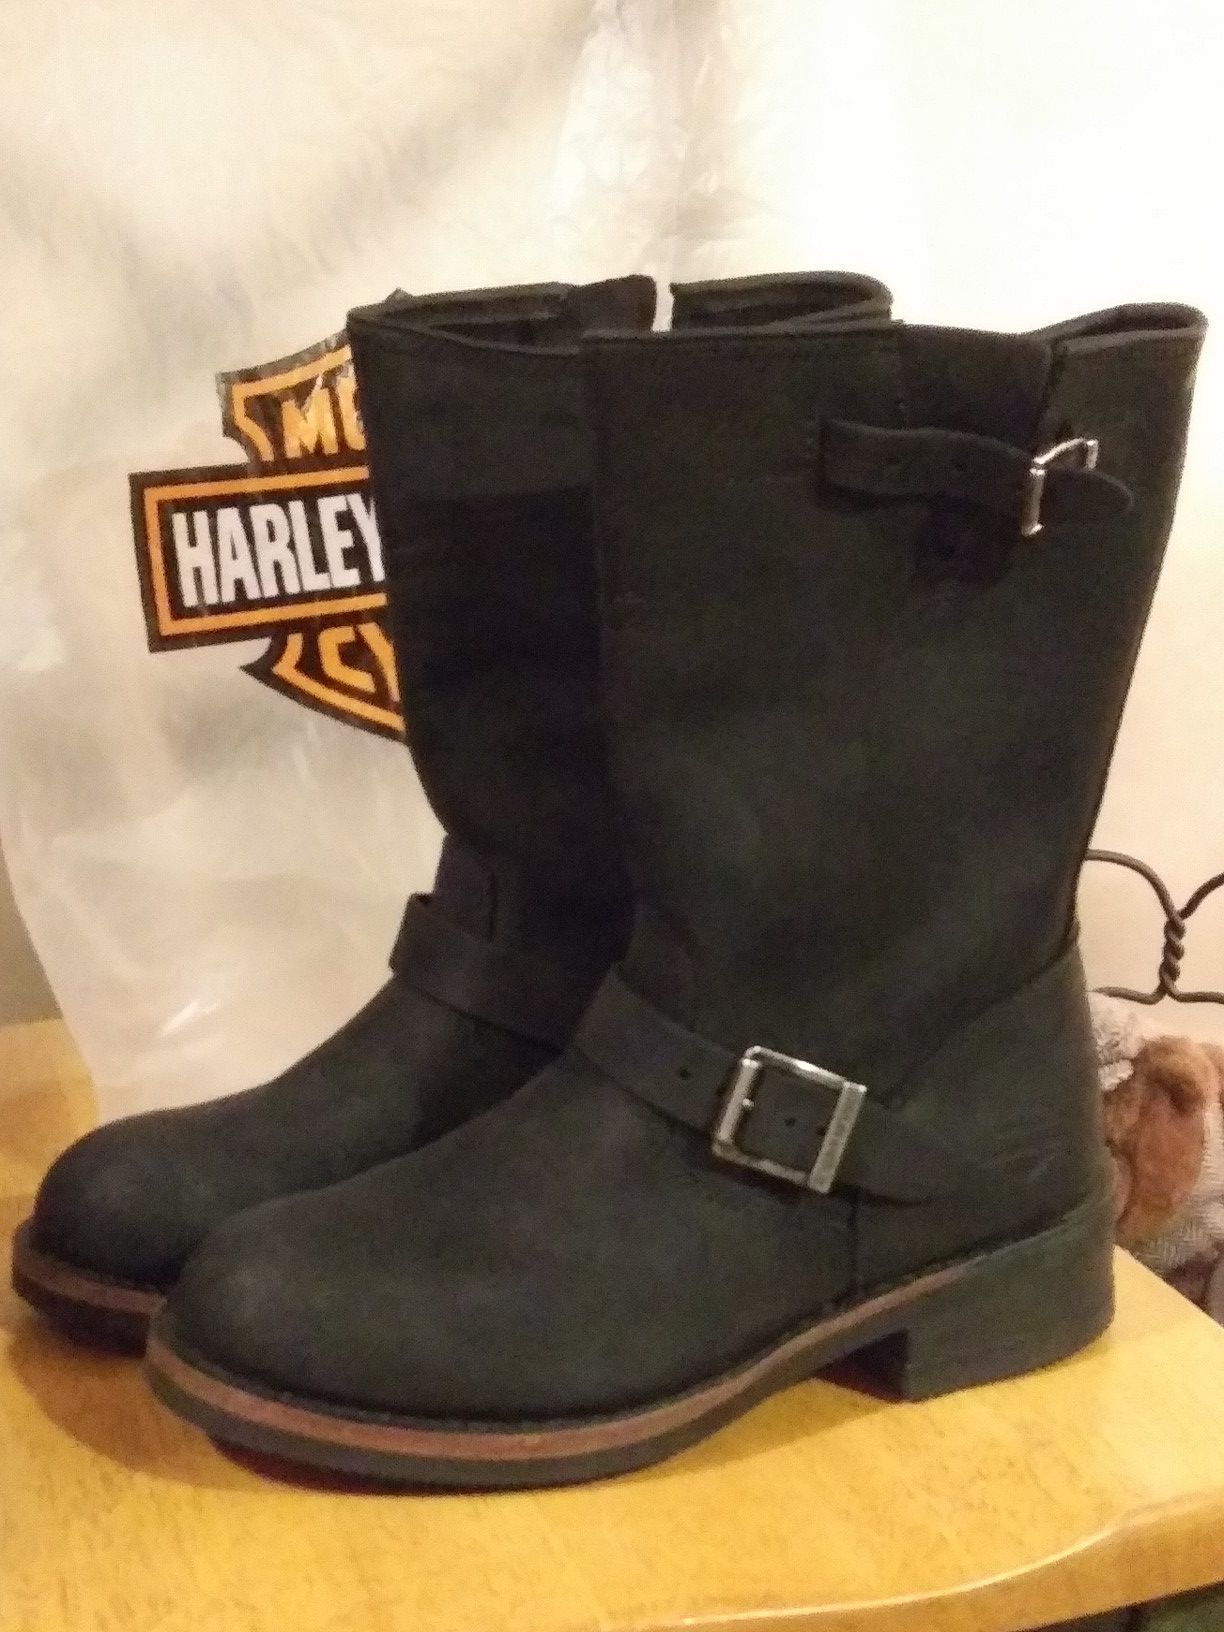 Woman's Harley Davidson boots size 8 half